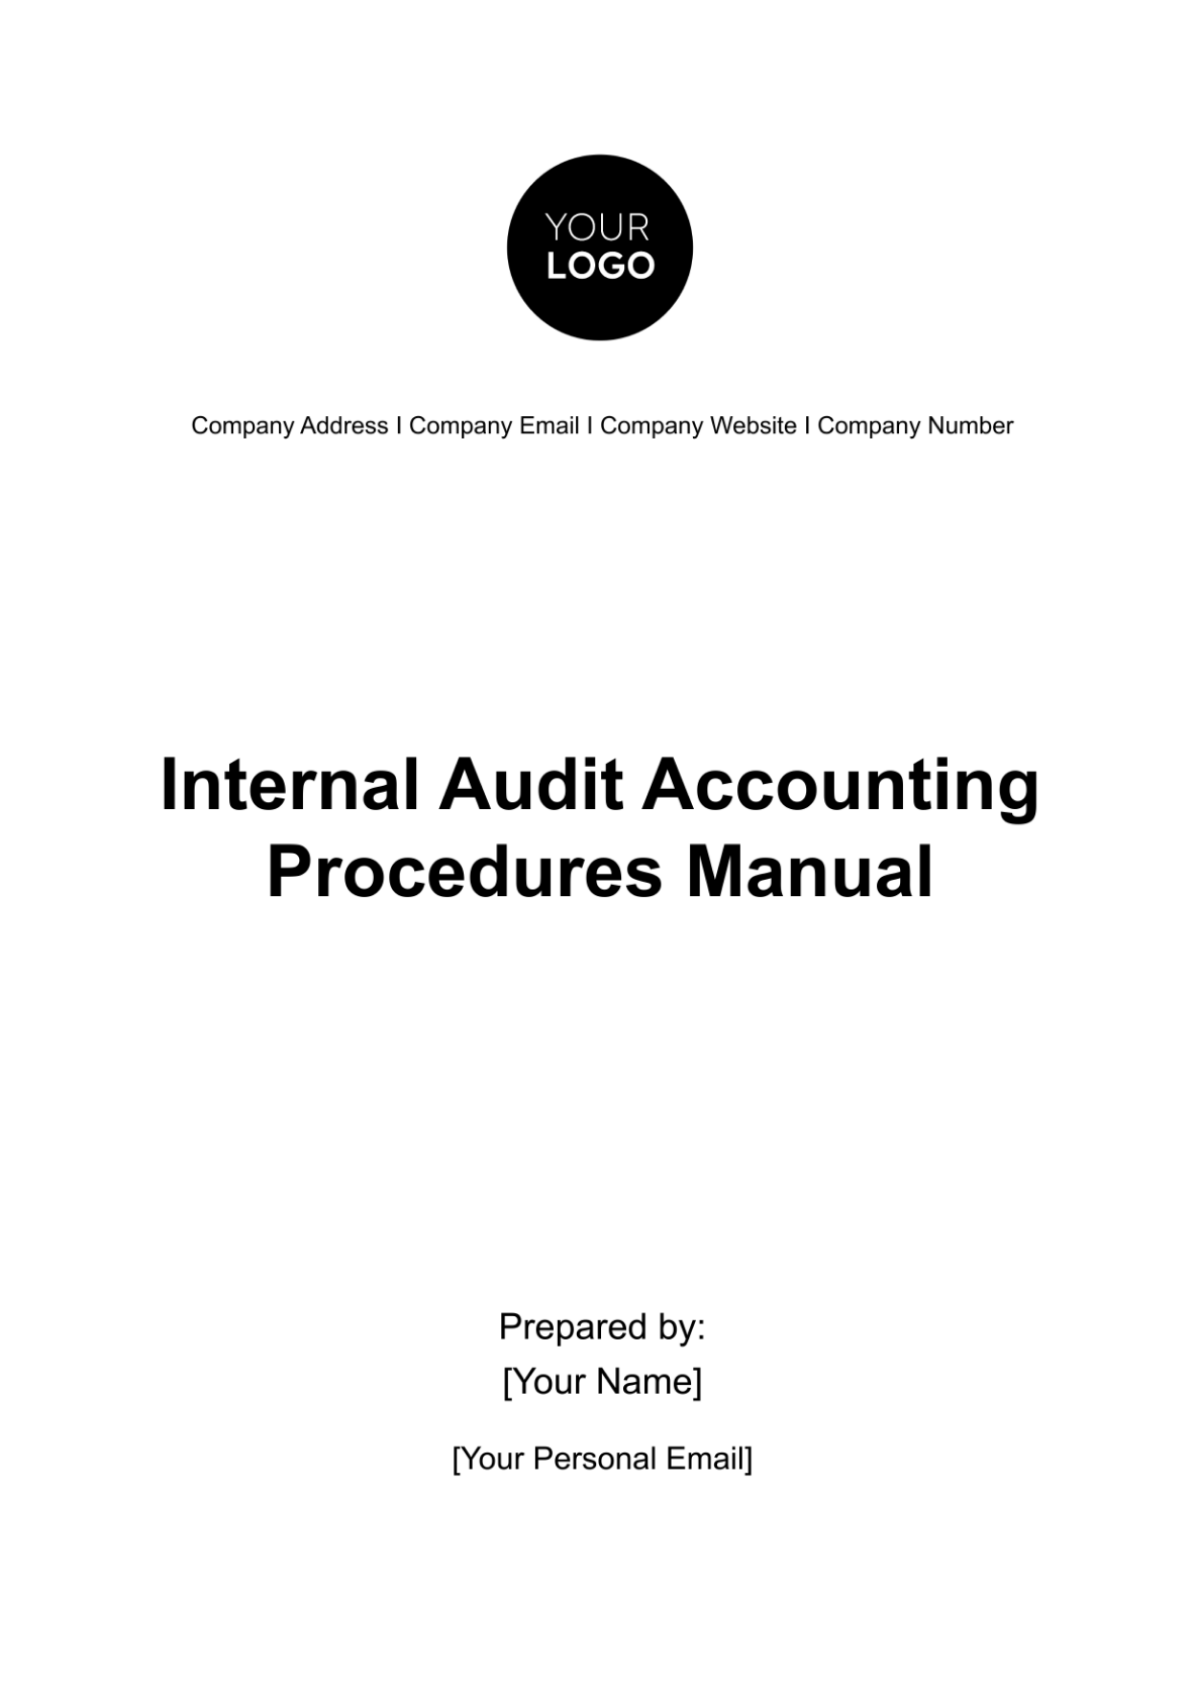 Free Internal Audit Accounting Procedures Manual Template